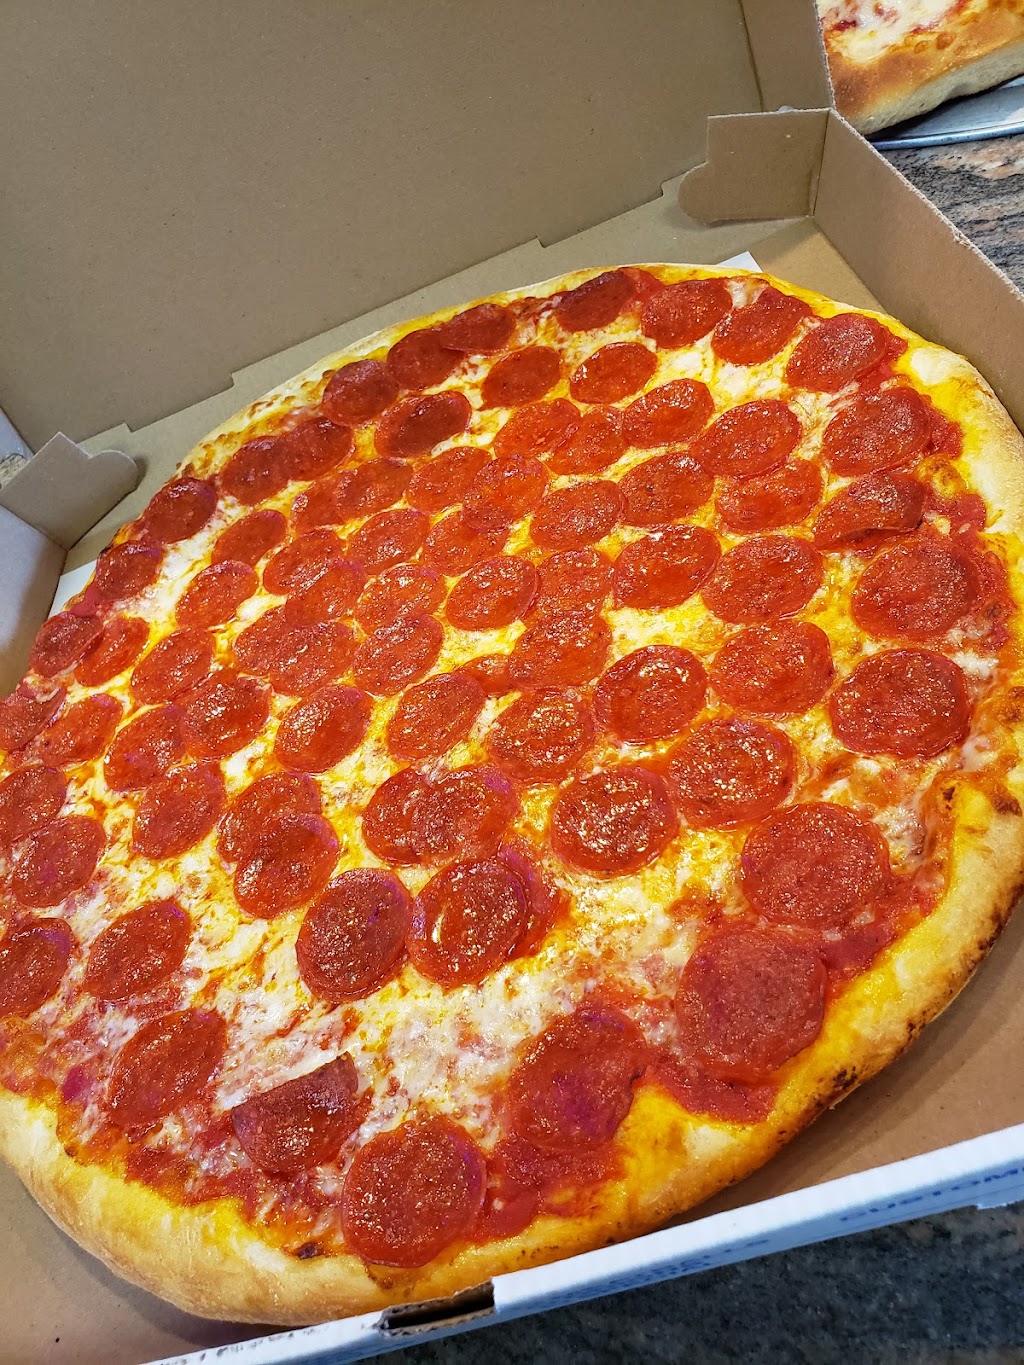 Franks Pizza and Italian Restaurant (Manville) | 140 N Main St, Manville, NJ 08835 | Phone: (908) 685-7717